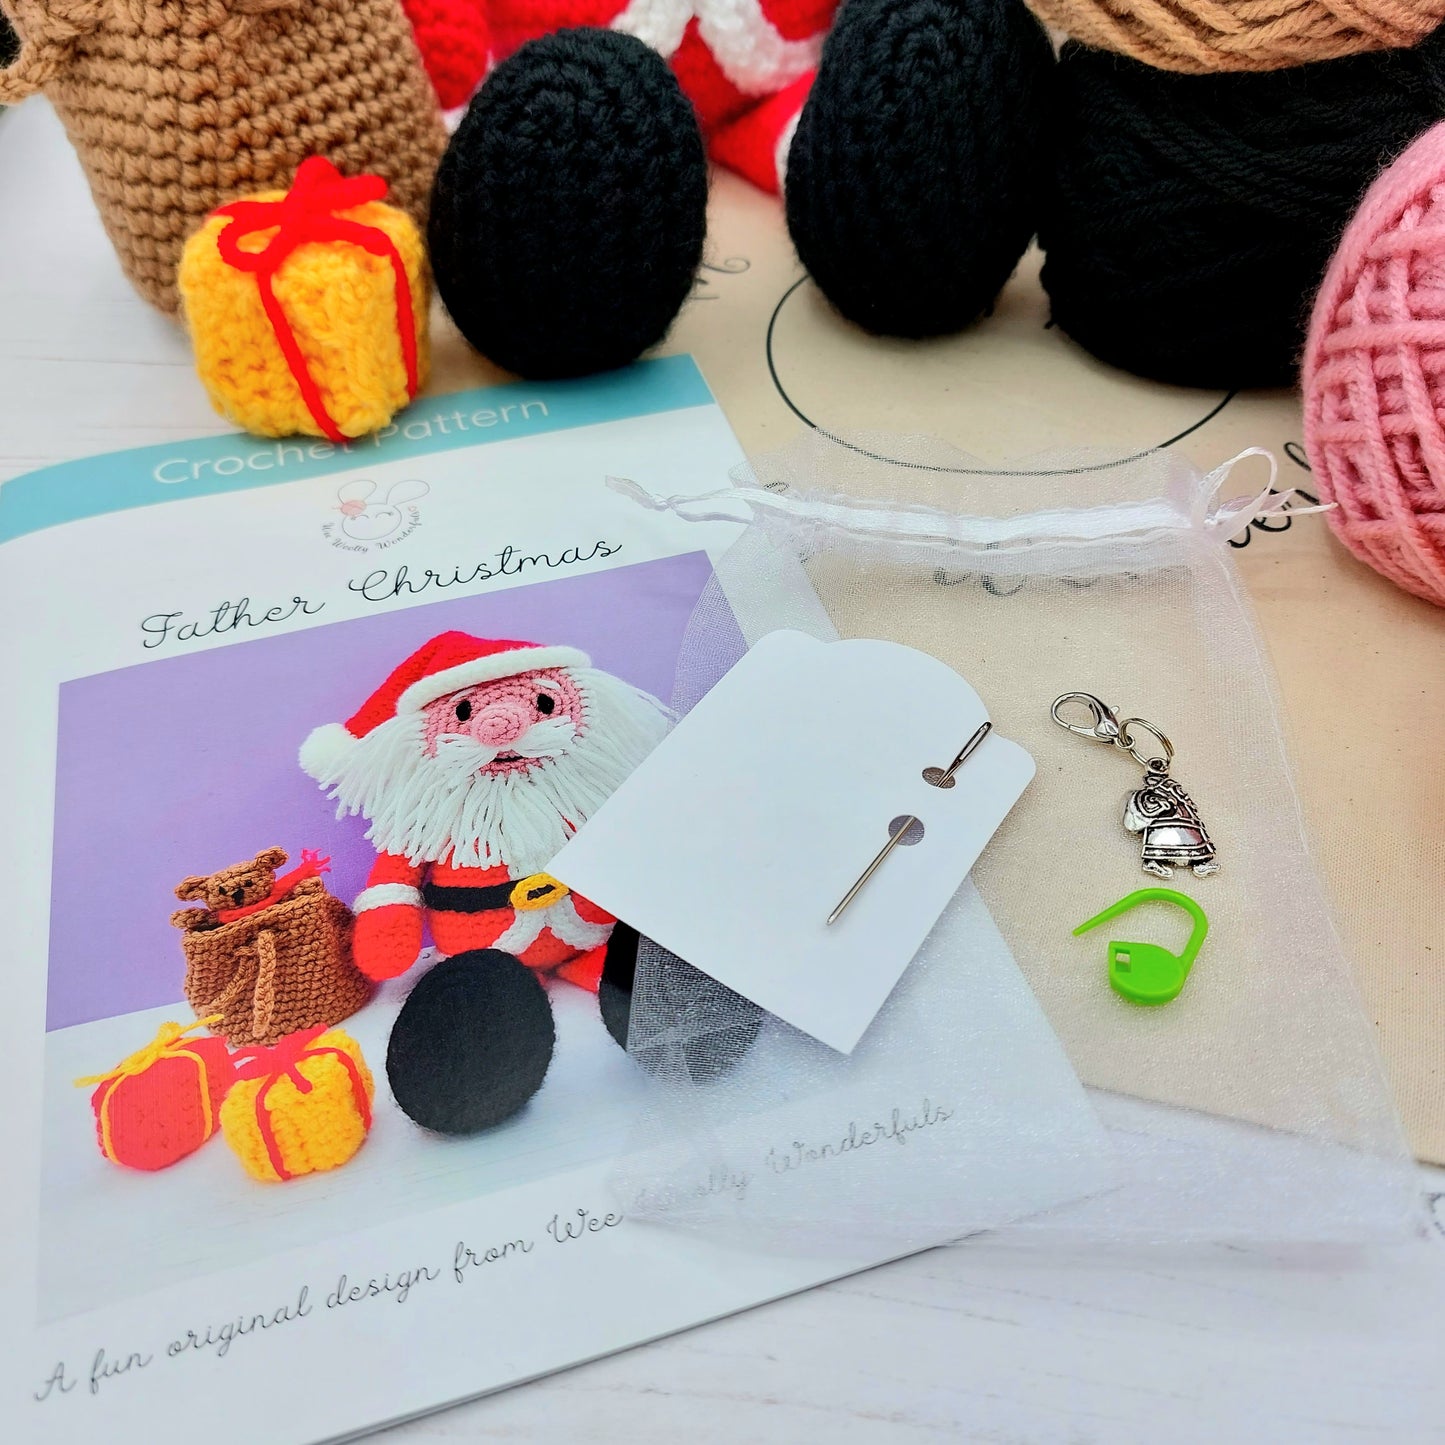 Father Christmas crochet pattern and festive stitch marker